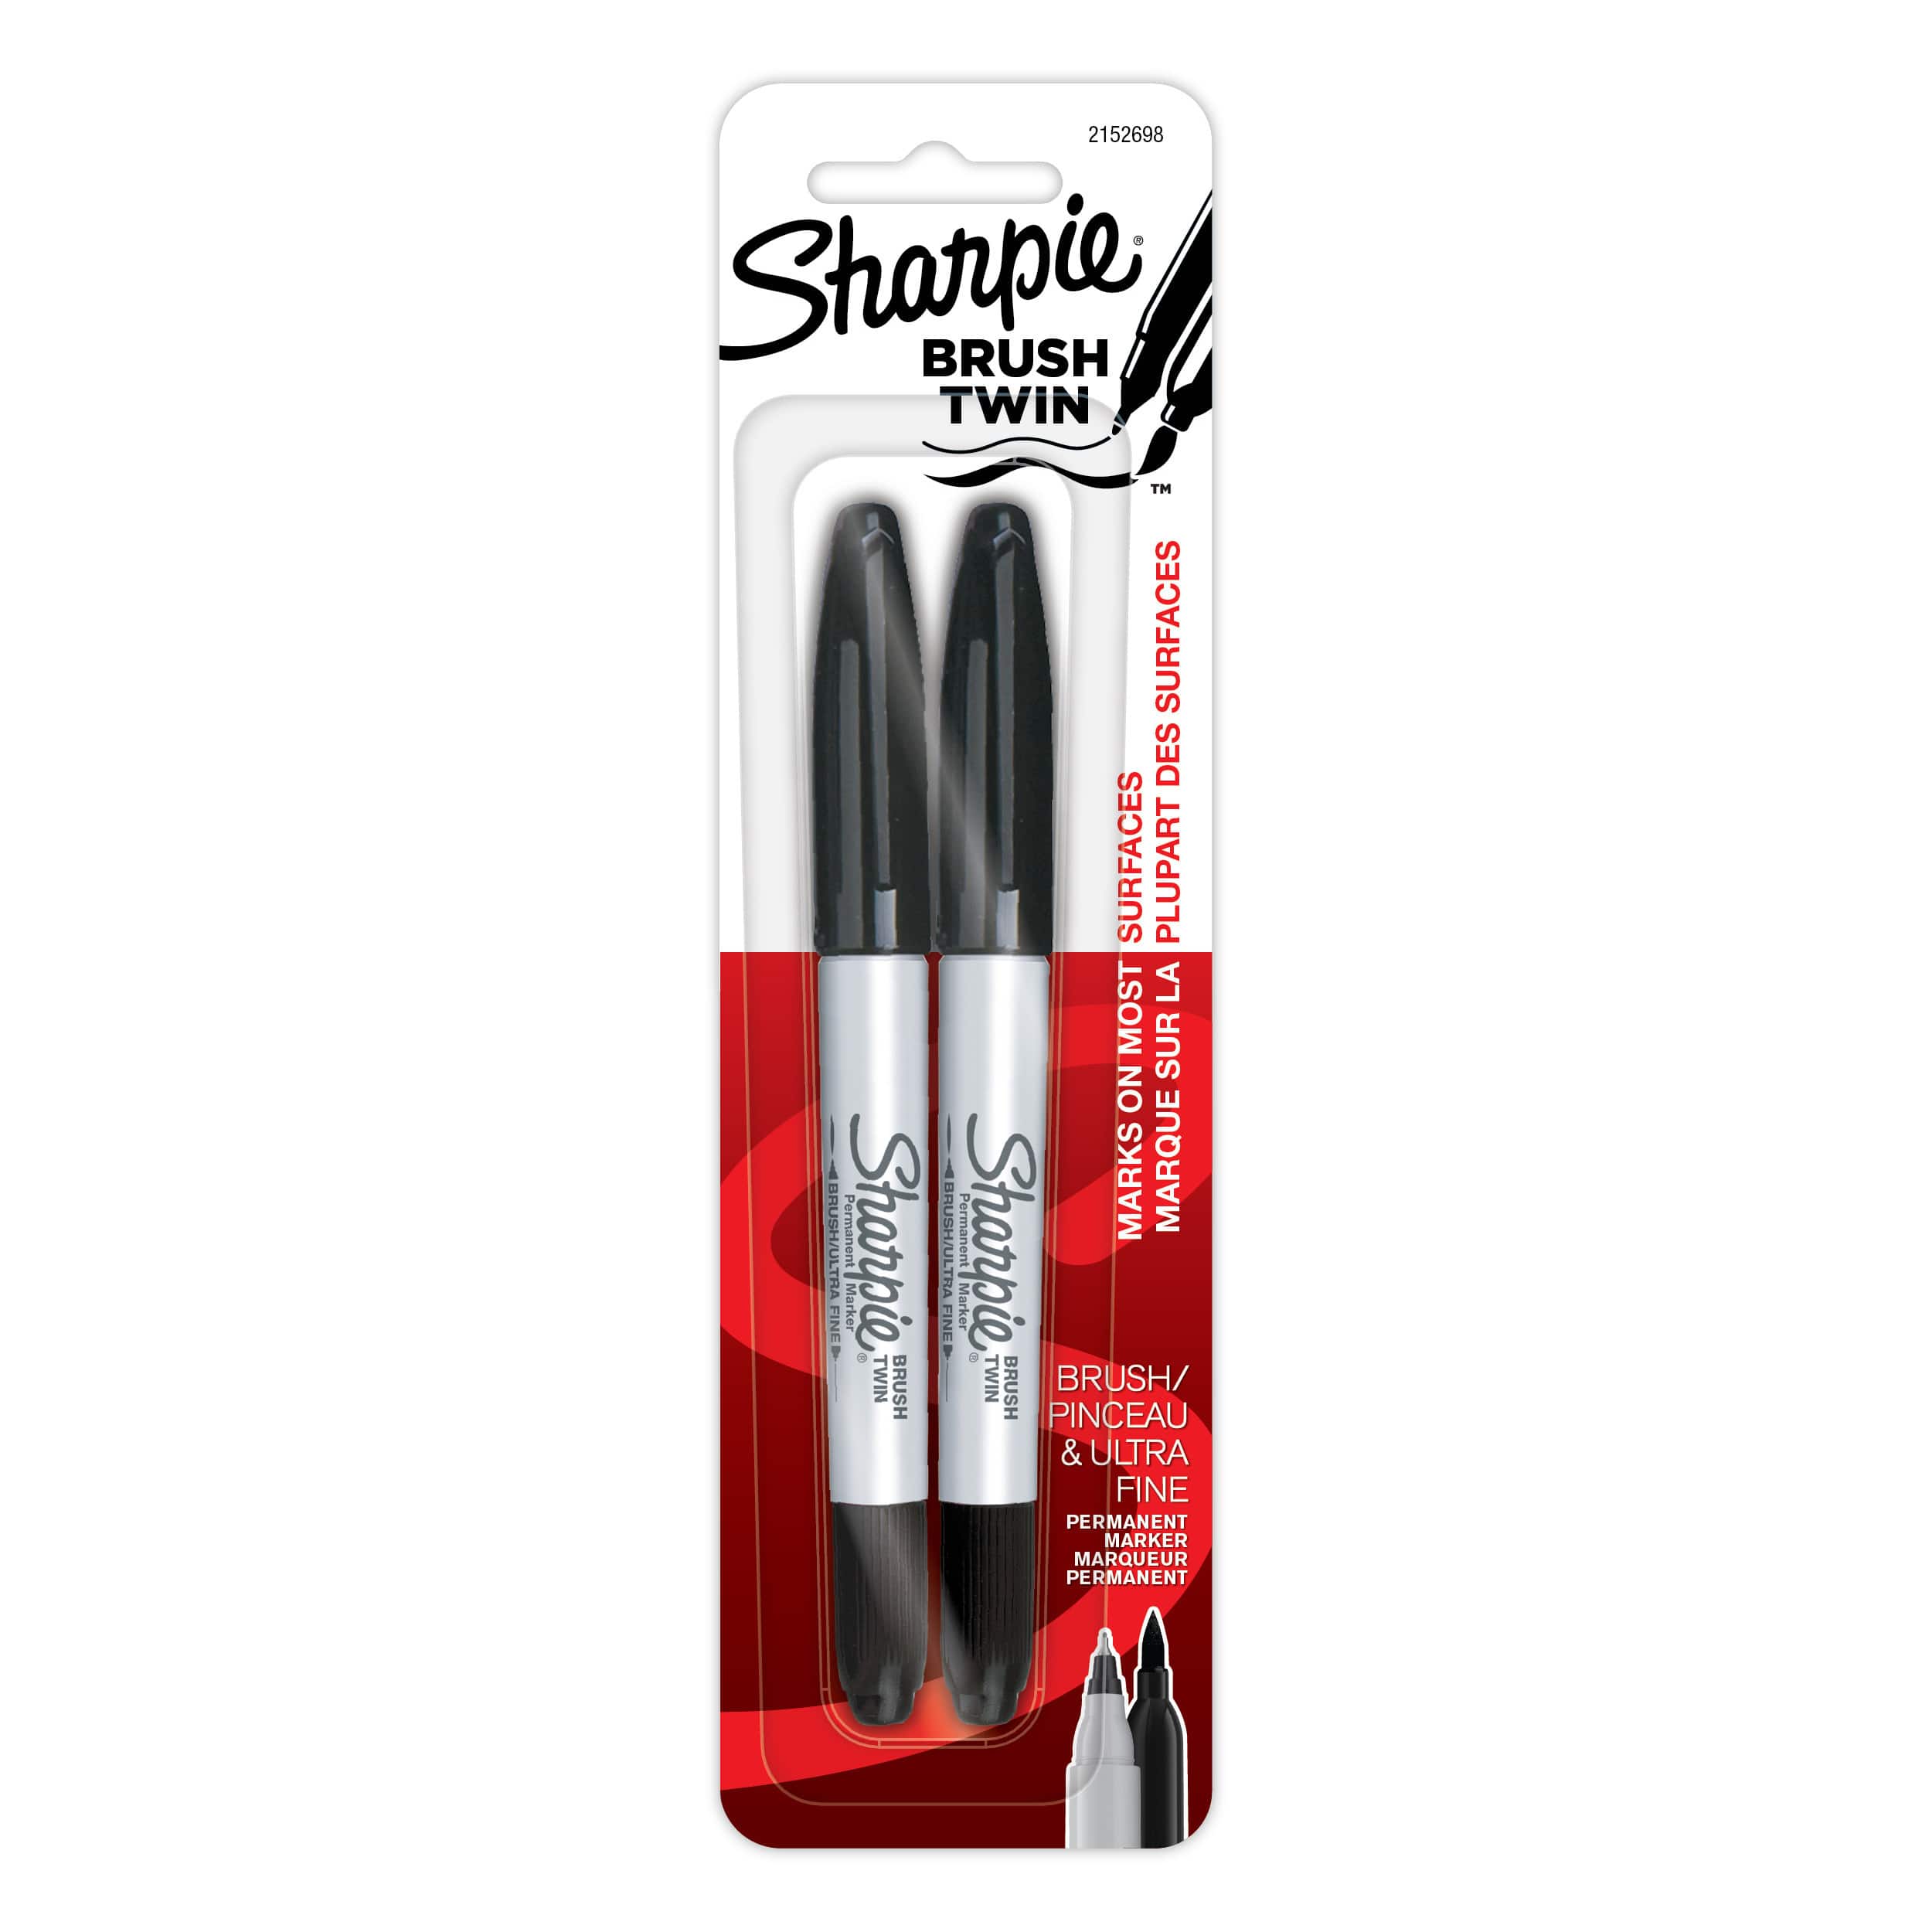 Sharpie Permanent Markers, Brush Tip